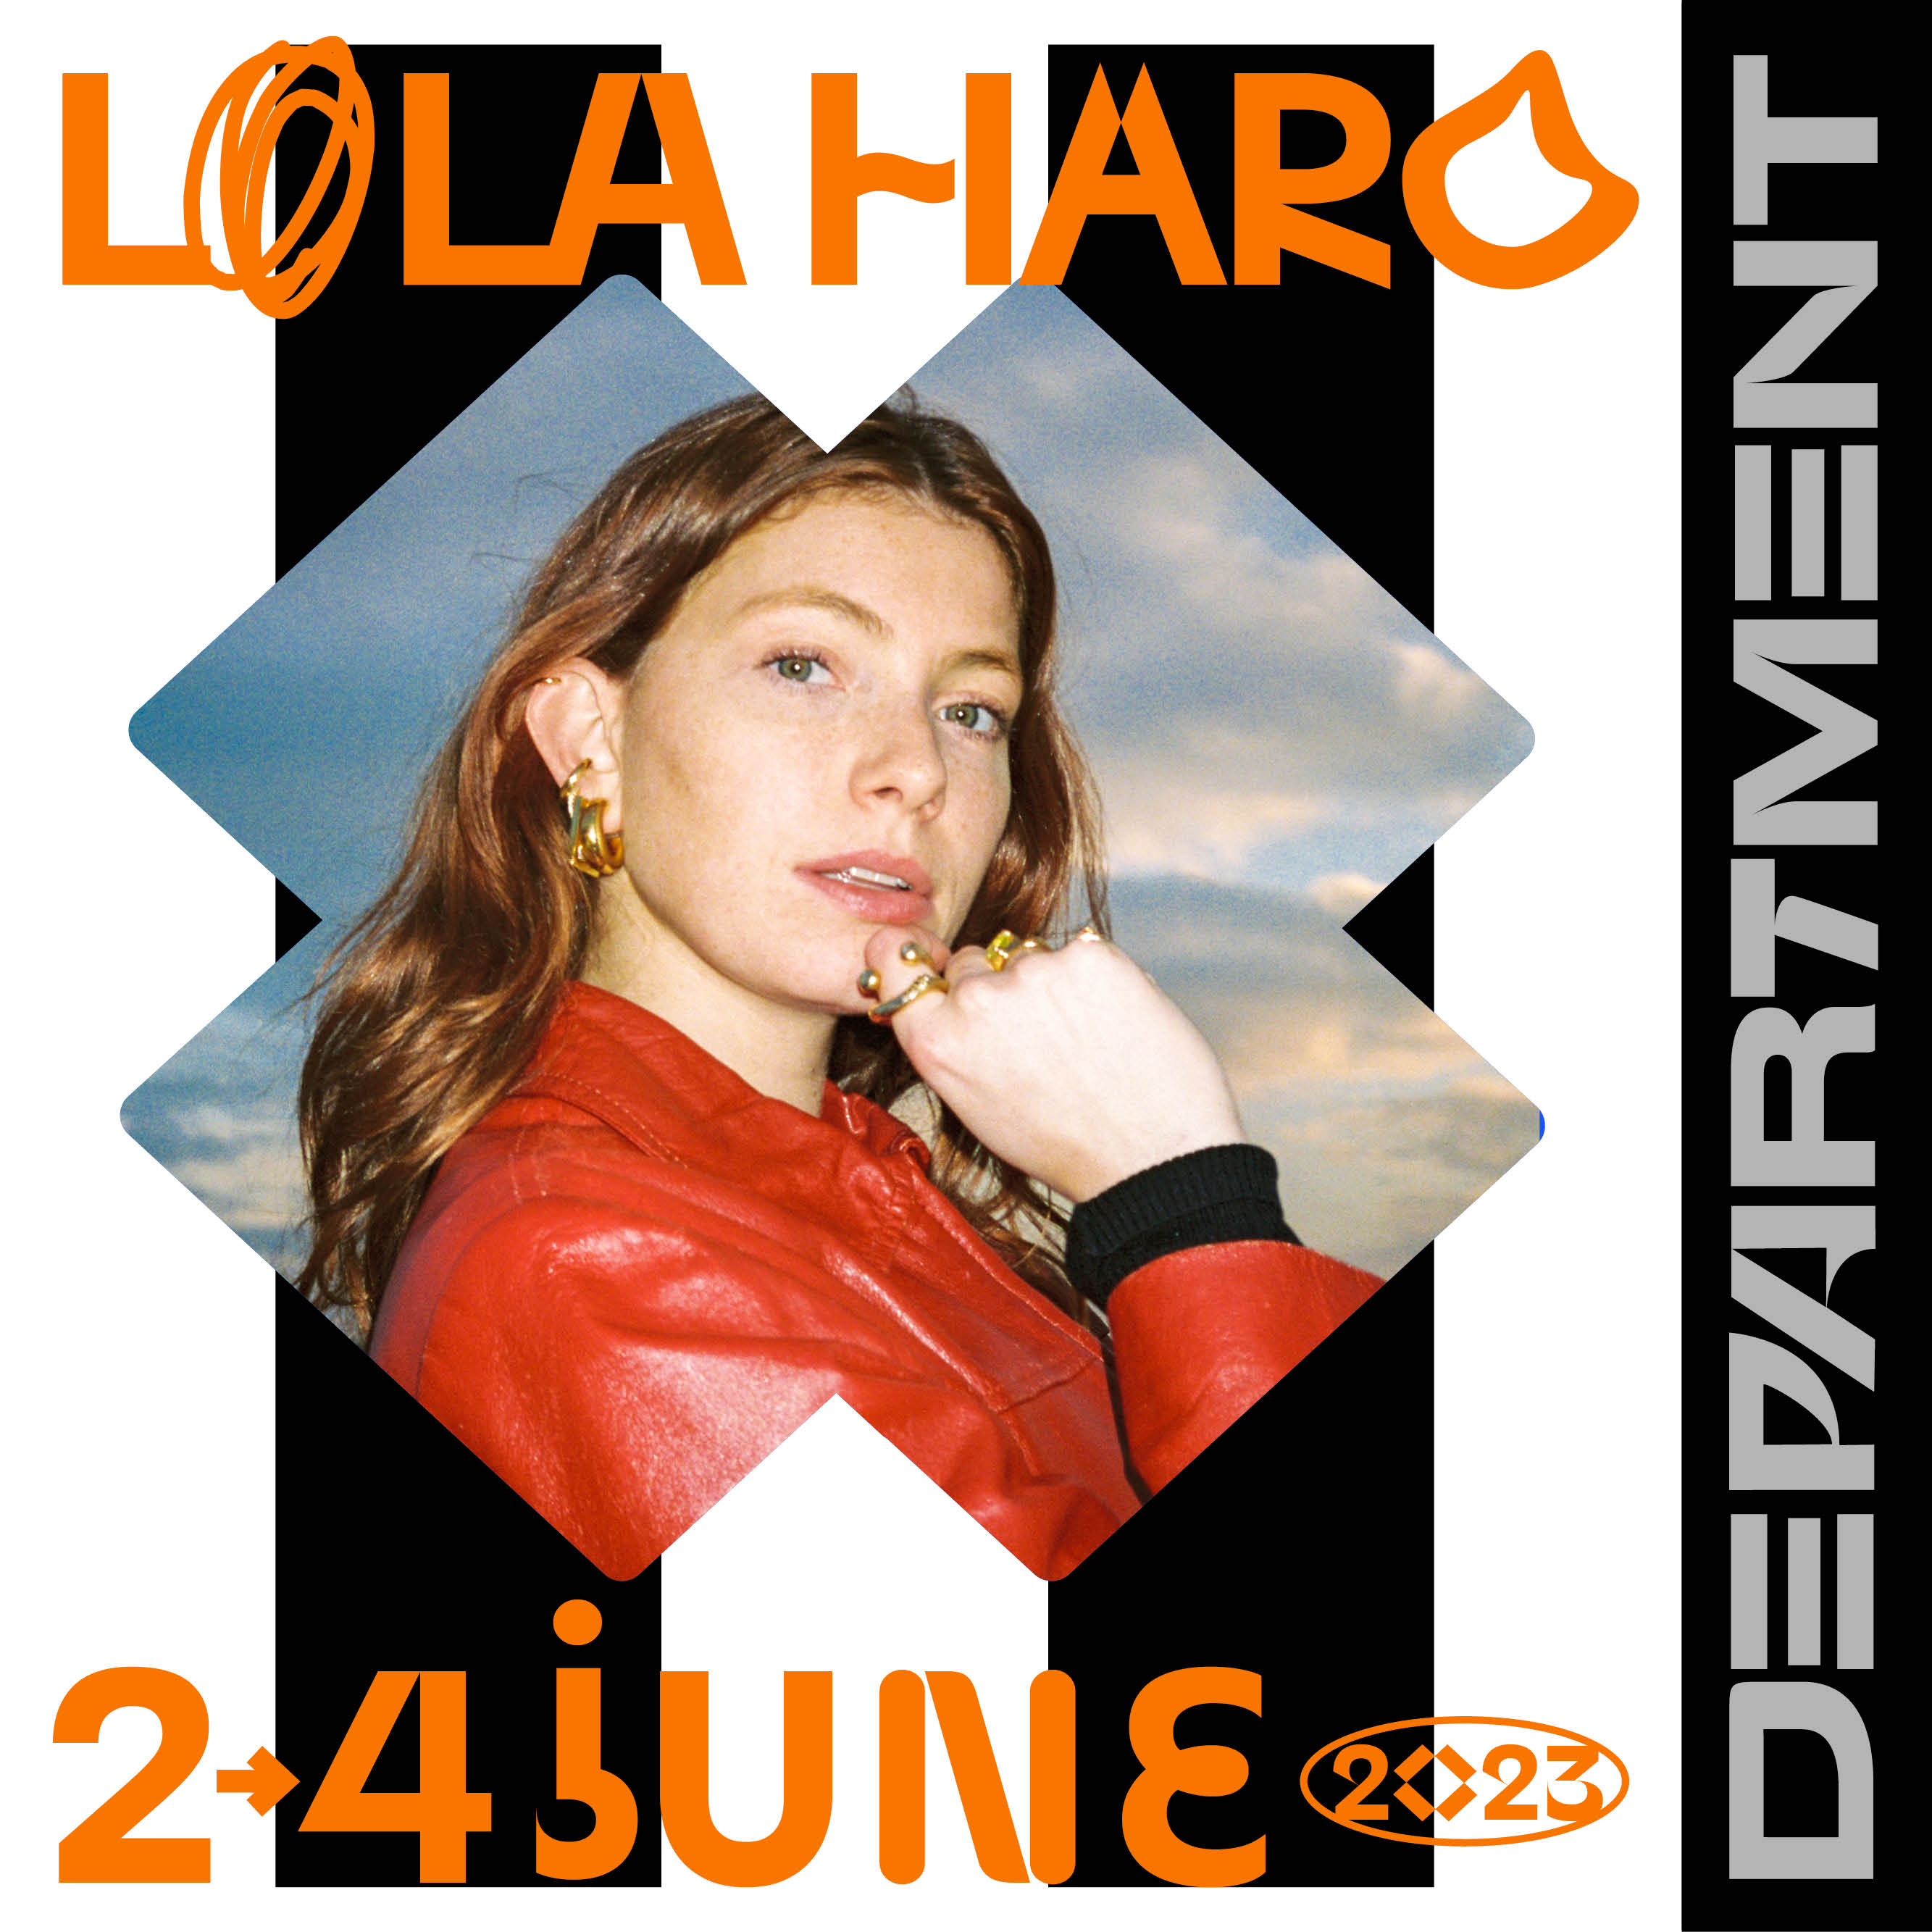 Lola Haro Stockholm Department Festival